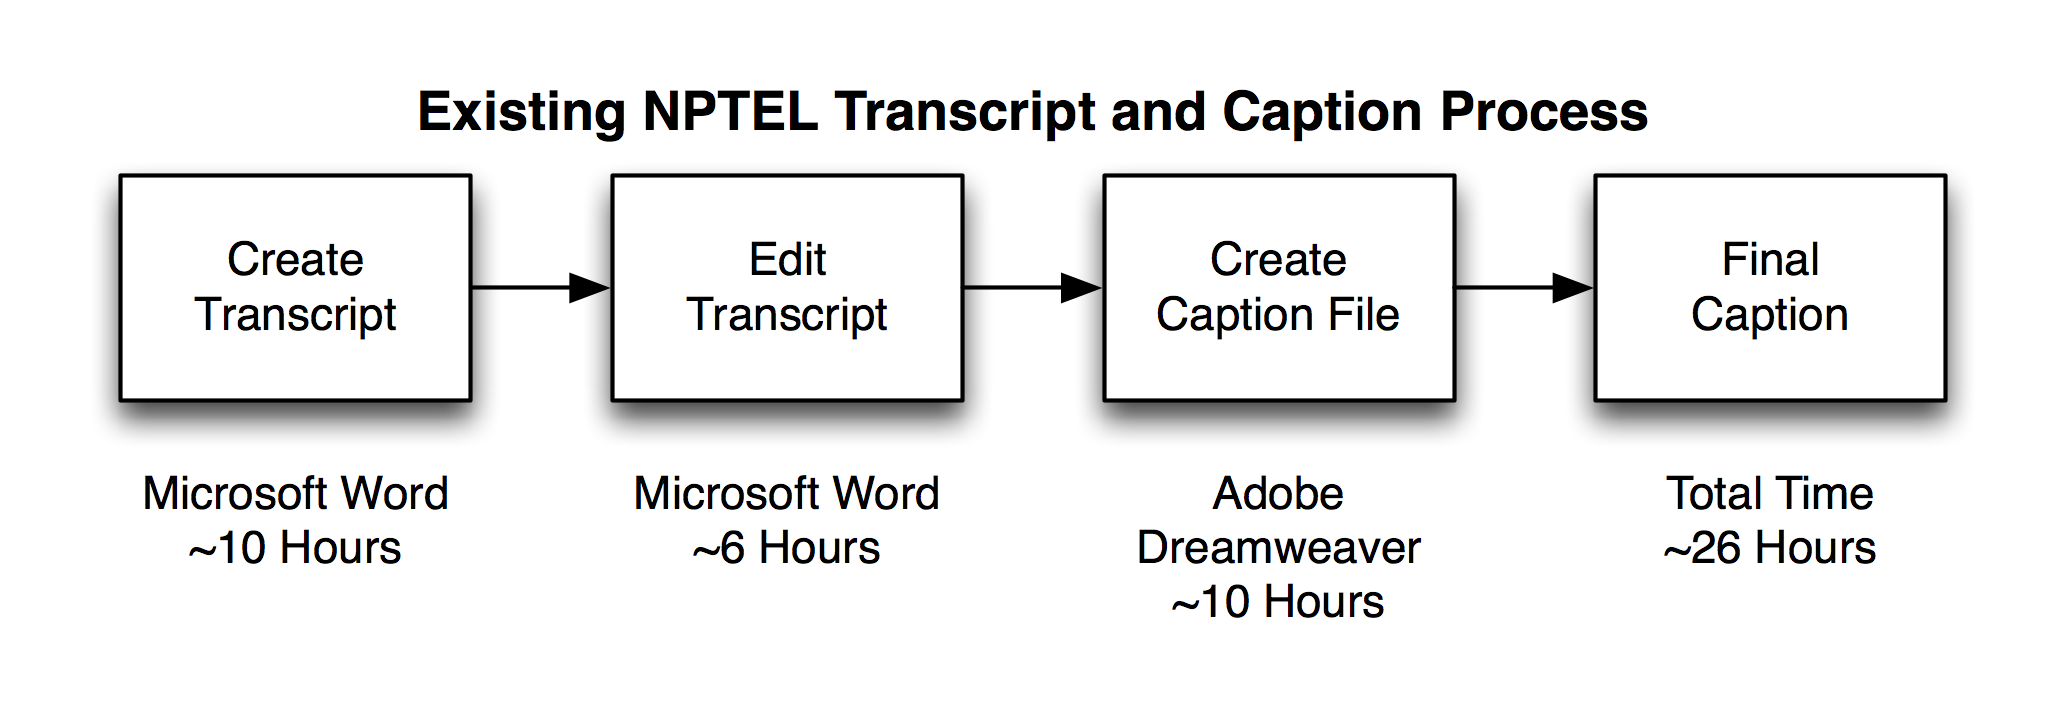 NPTEL Current Transcription and Captioning Process